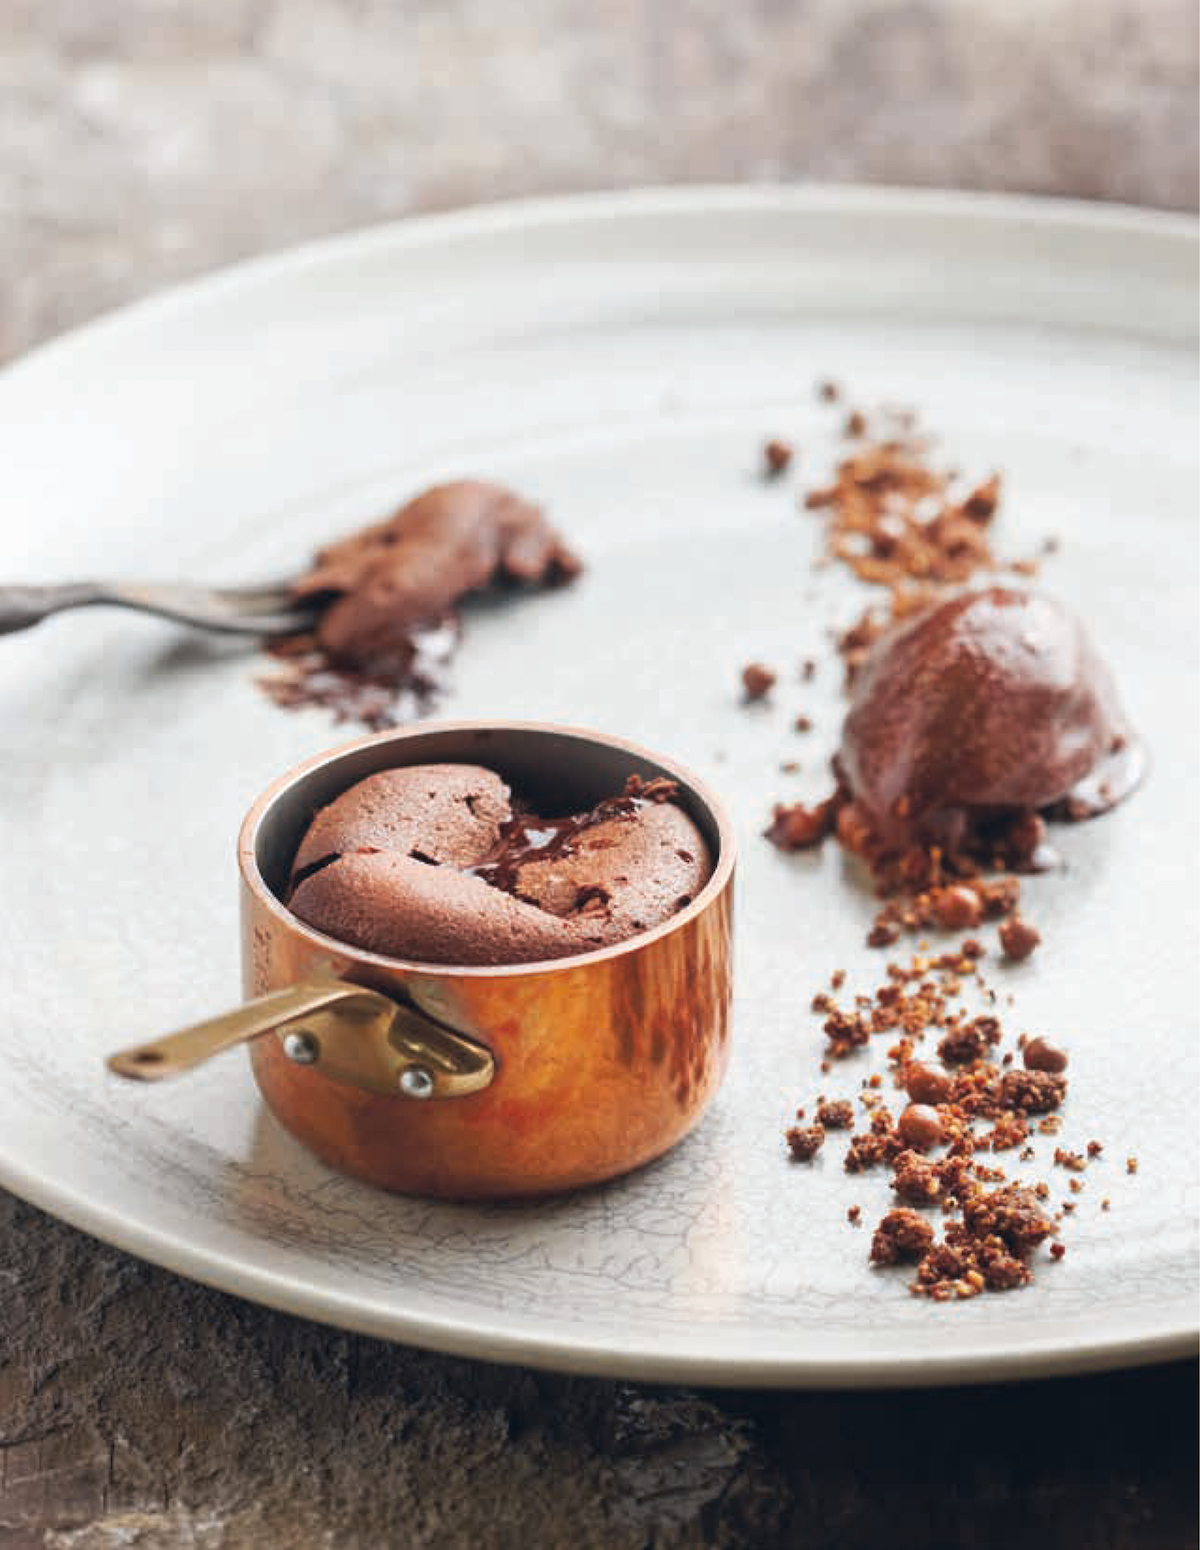 Liam Tomlin's warm chocolate fondant with chocolate sorbet